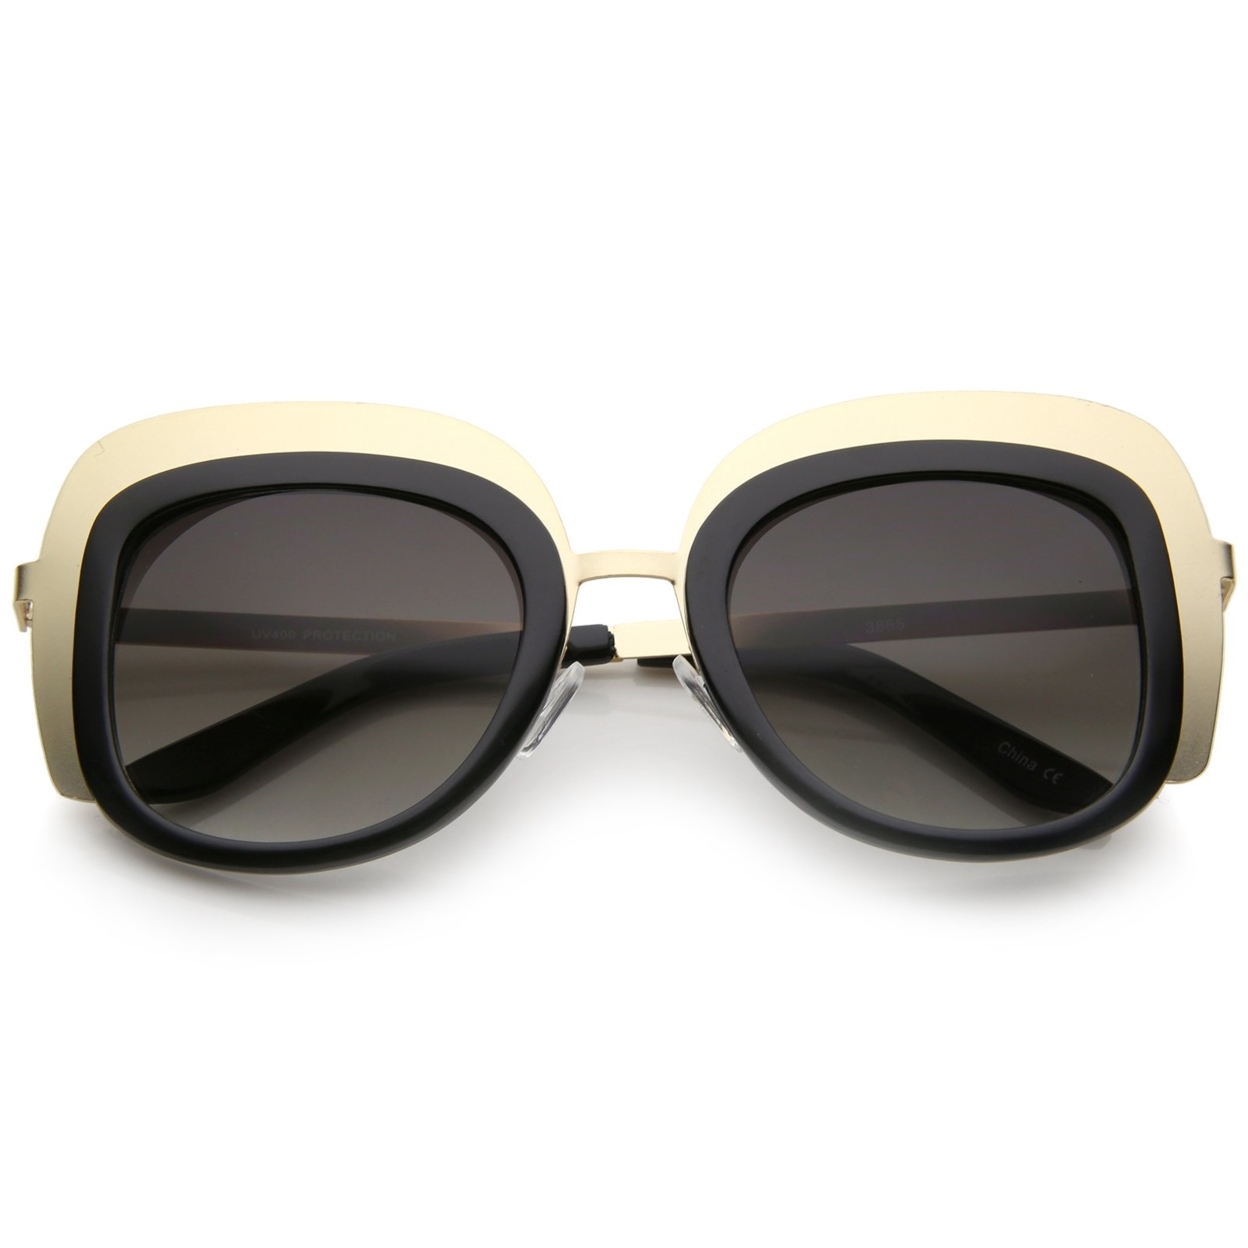 Women's Oversize Two-Tone Metal Frame Border Square Sunglasses 43mm - Gold-Black / Lavender